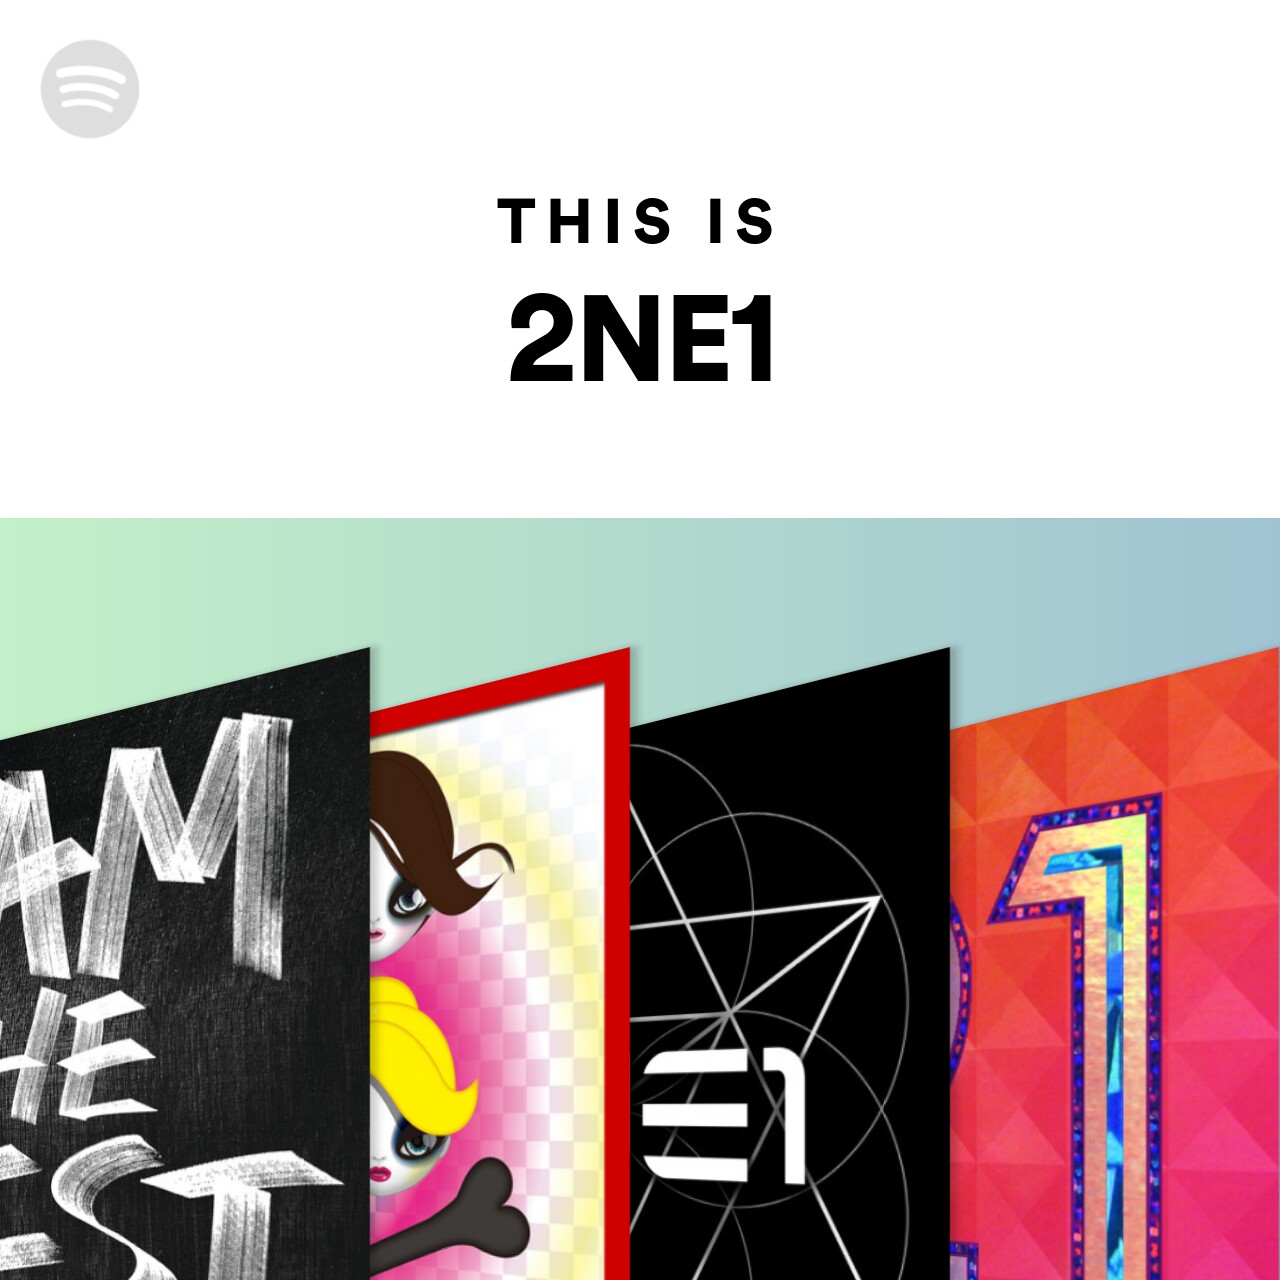 This Is 2NE1 by spotify Spotify Playlist